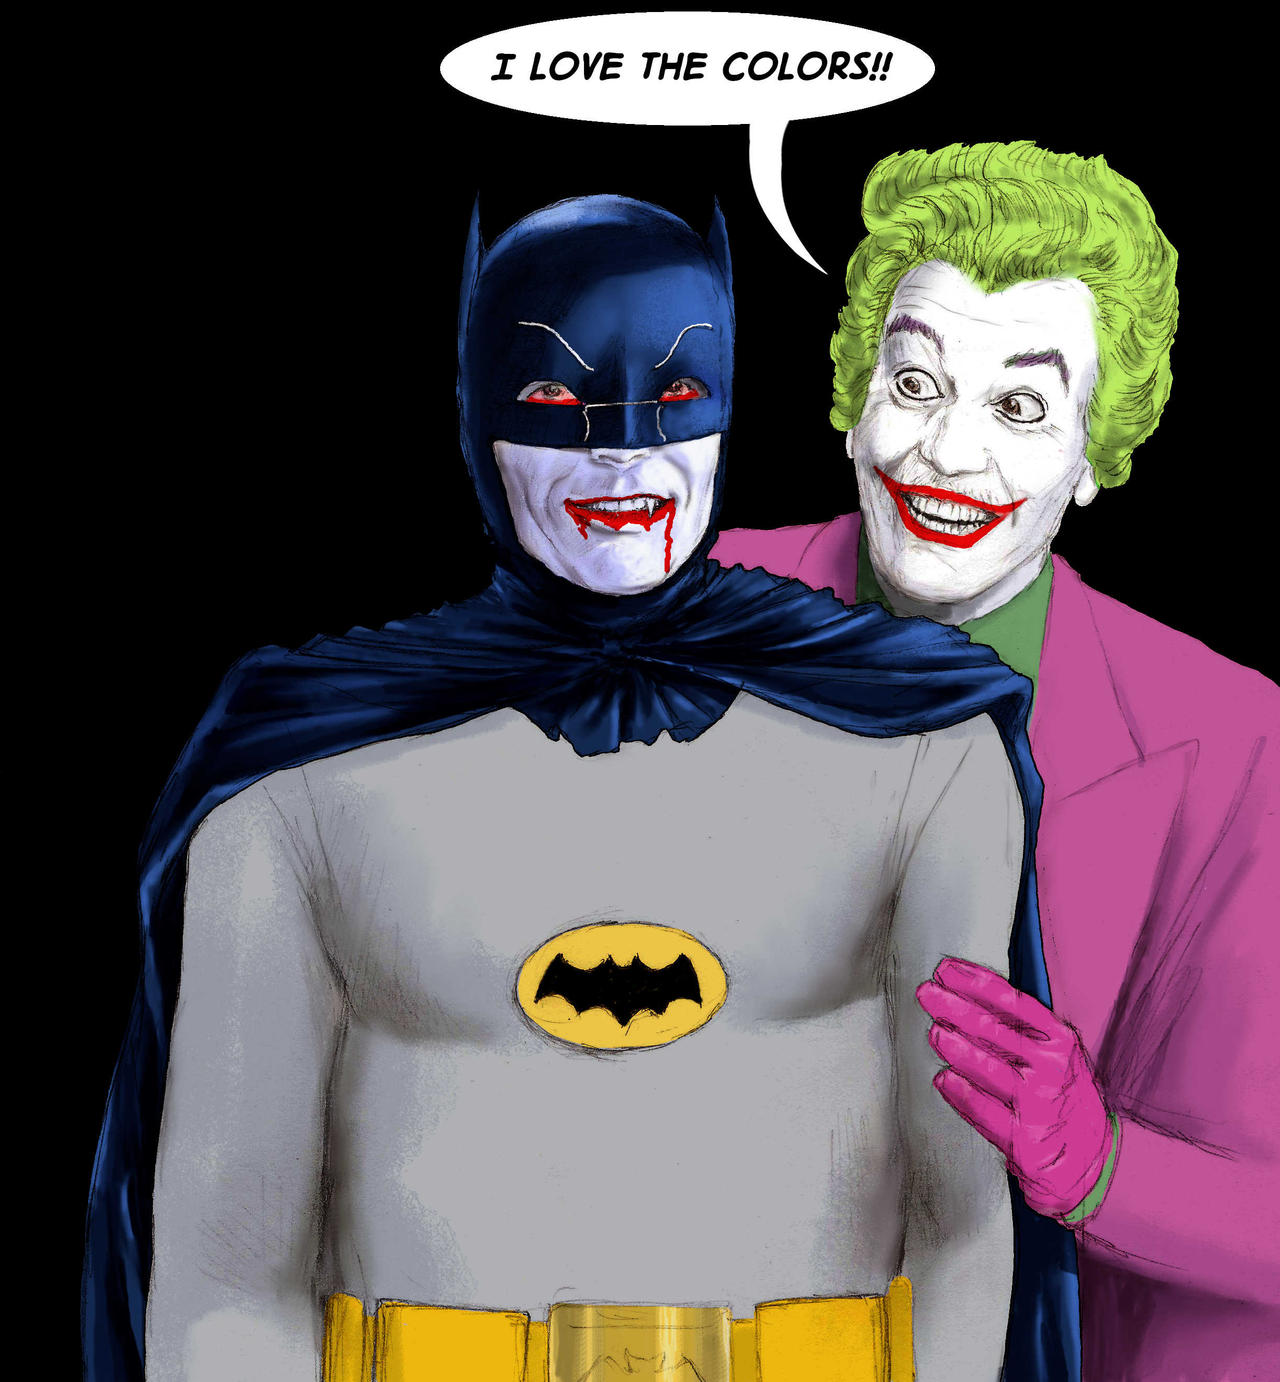 TLIID Vampire Comic characters - Adam West Batman by Nick-Perks on  DeviantArt